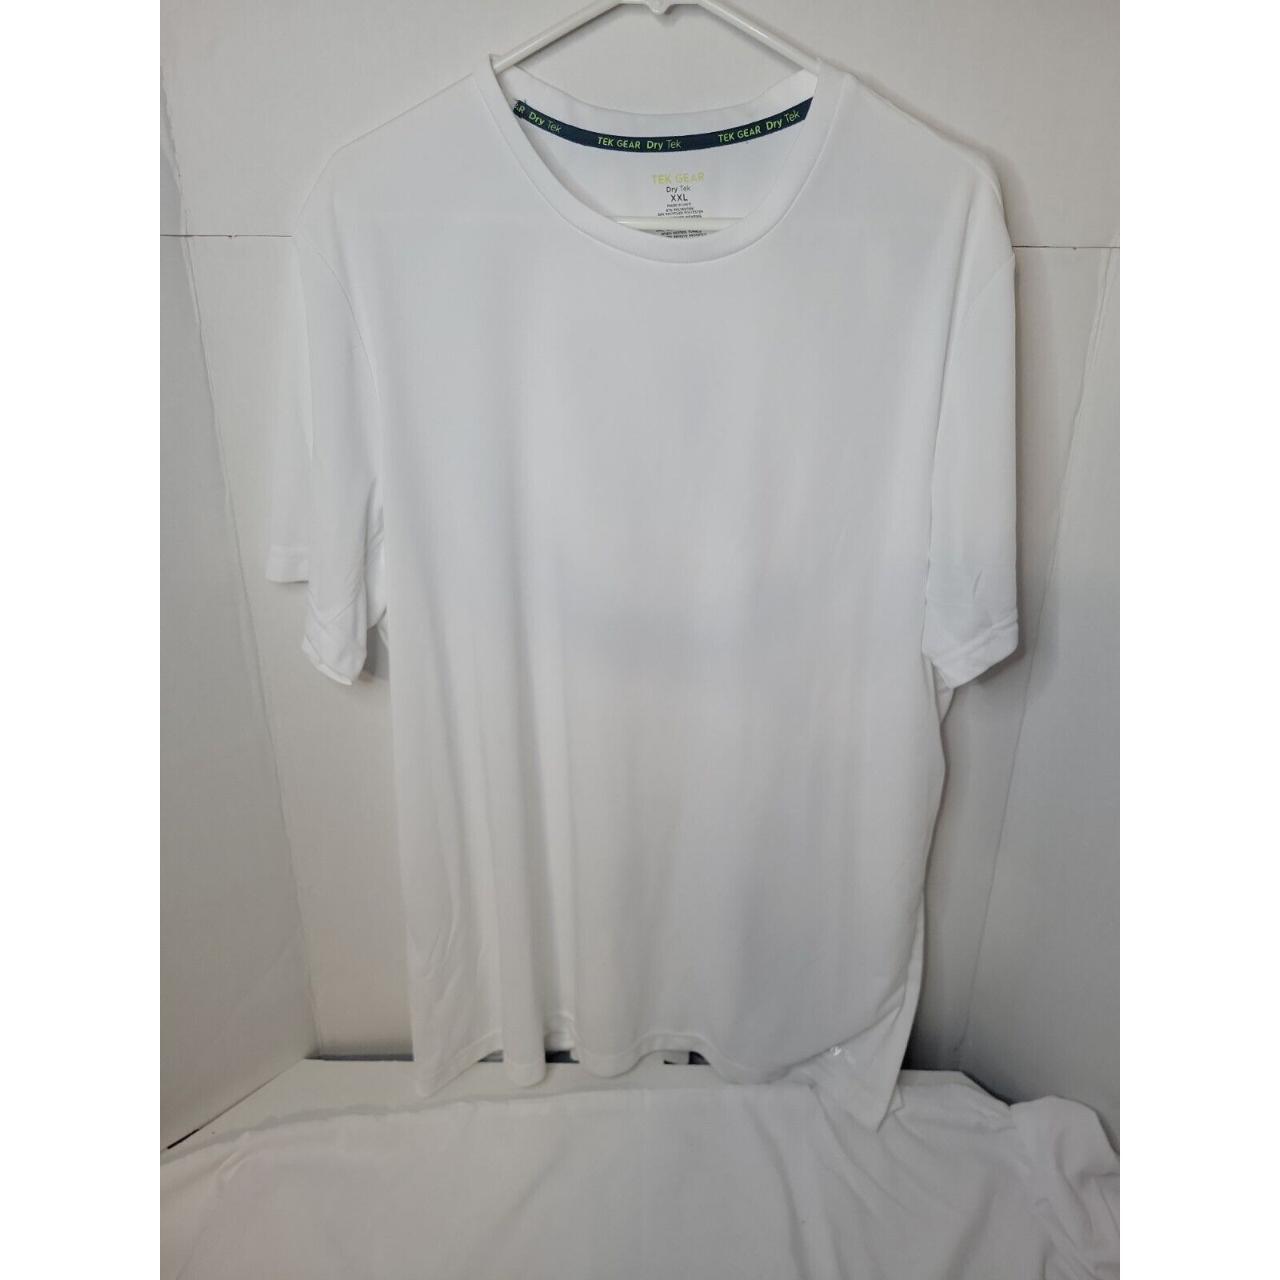 Tek Gear Dry Tek White Xxl Recycled Shirt. Feel free - Depop